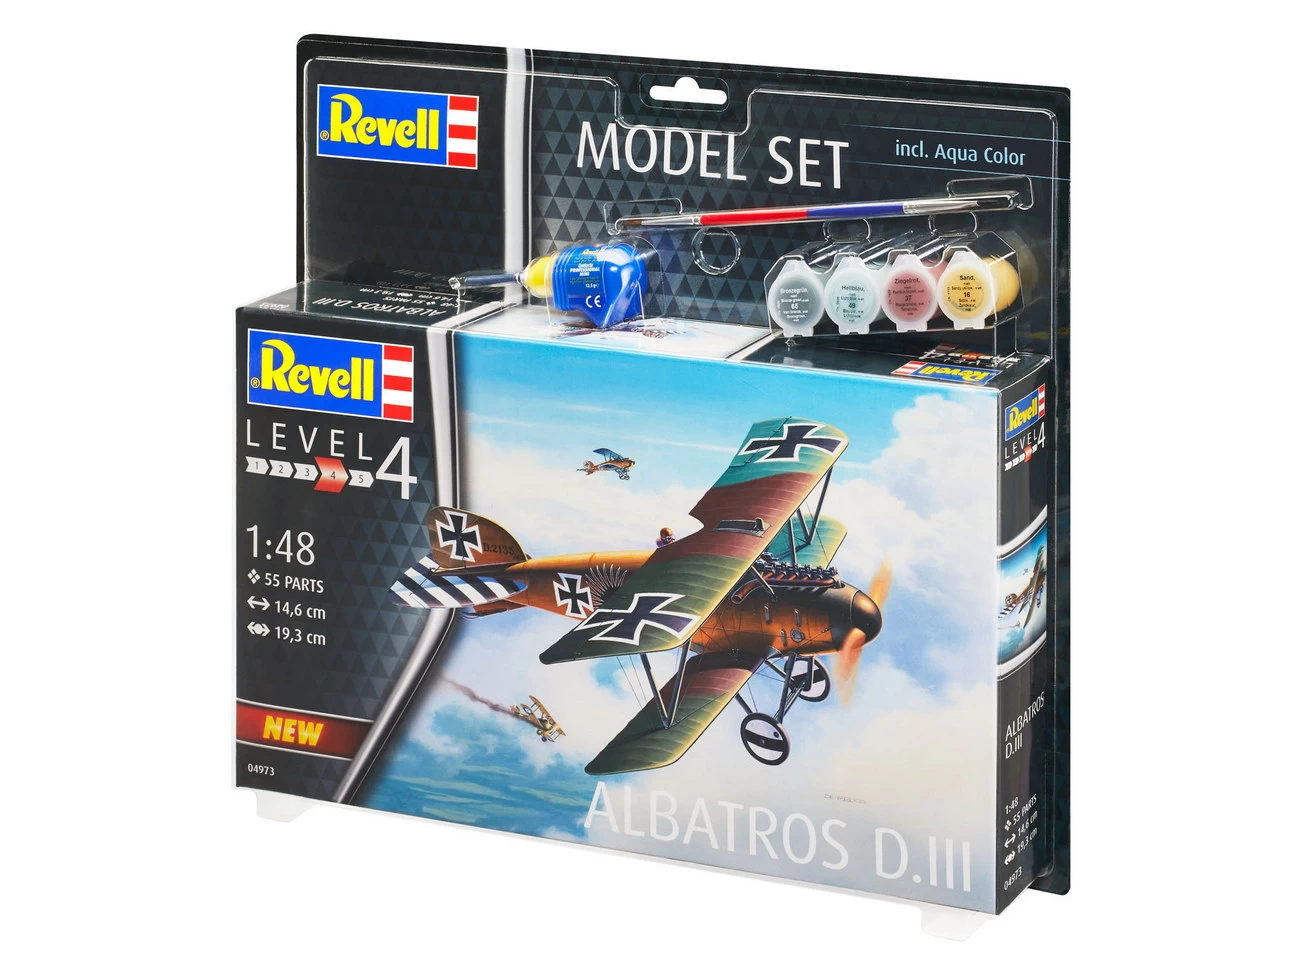 Model Set Albatros DIII (64973)